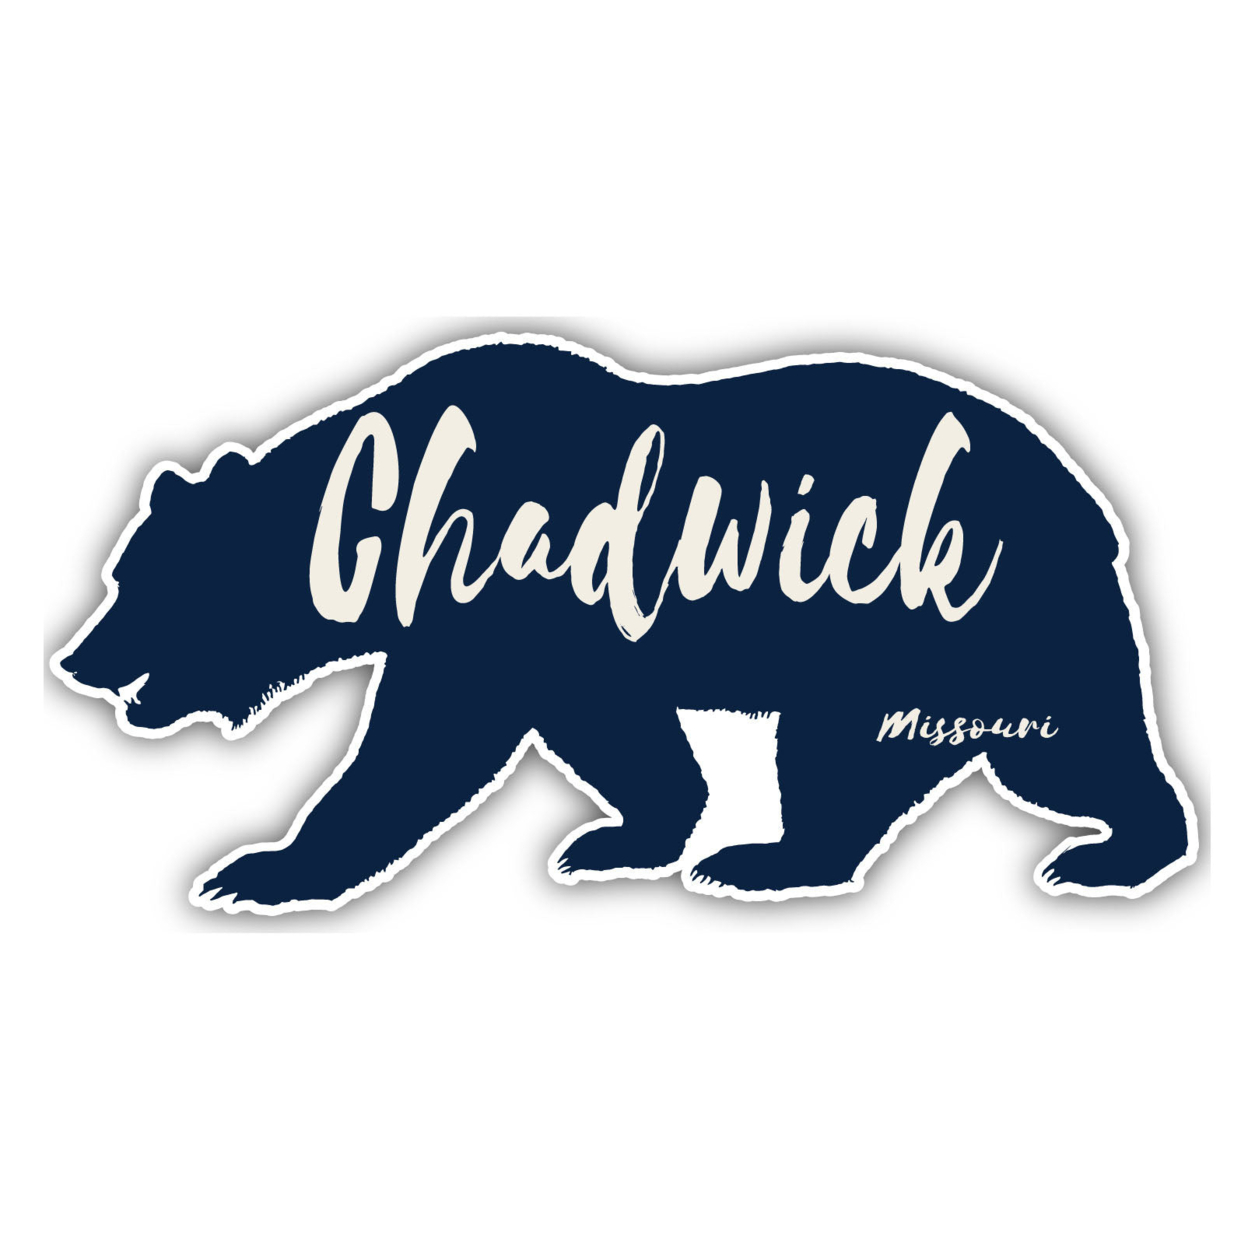 Chadwick Missouri Souvenir Decorative Stickers (Choose Theme And Size) - 4-Pack, 2-Inch, Tent